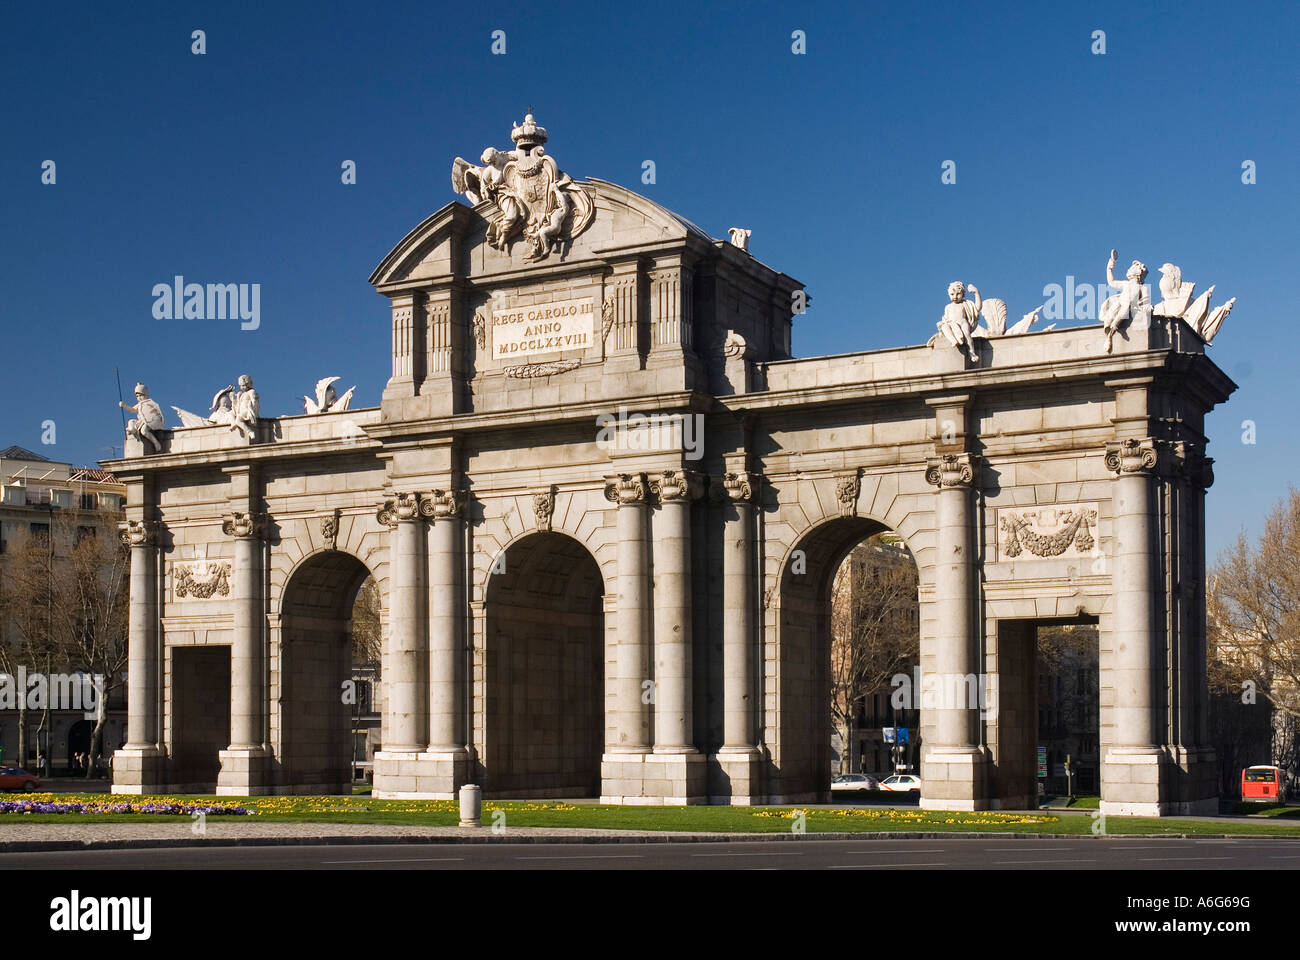 Puerta de Alcala at Plaza de Independencia, Madrid, Spain Stock Photo